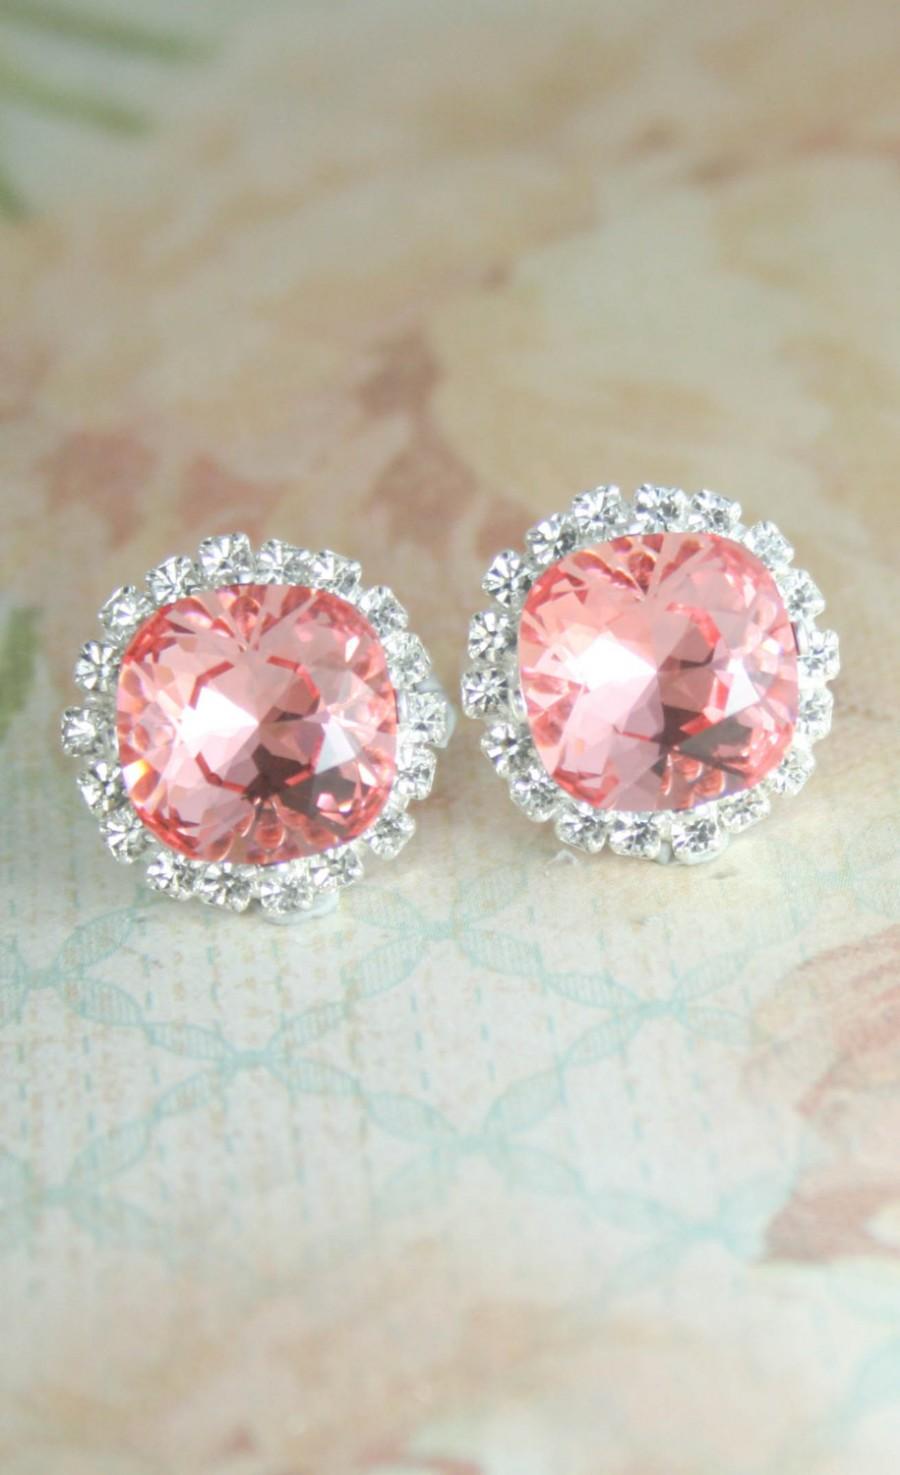 Hochzeit - Pink crystal earrings,swarovski earrings,square earrings,stud earrings,crystal earrings,bridal earrings,bridesmaid earrings,pink wedding